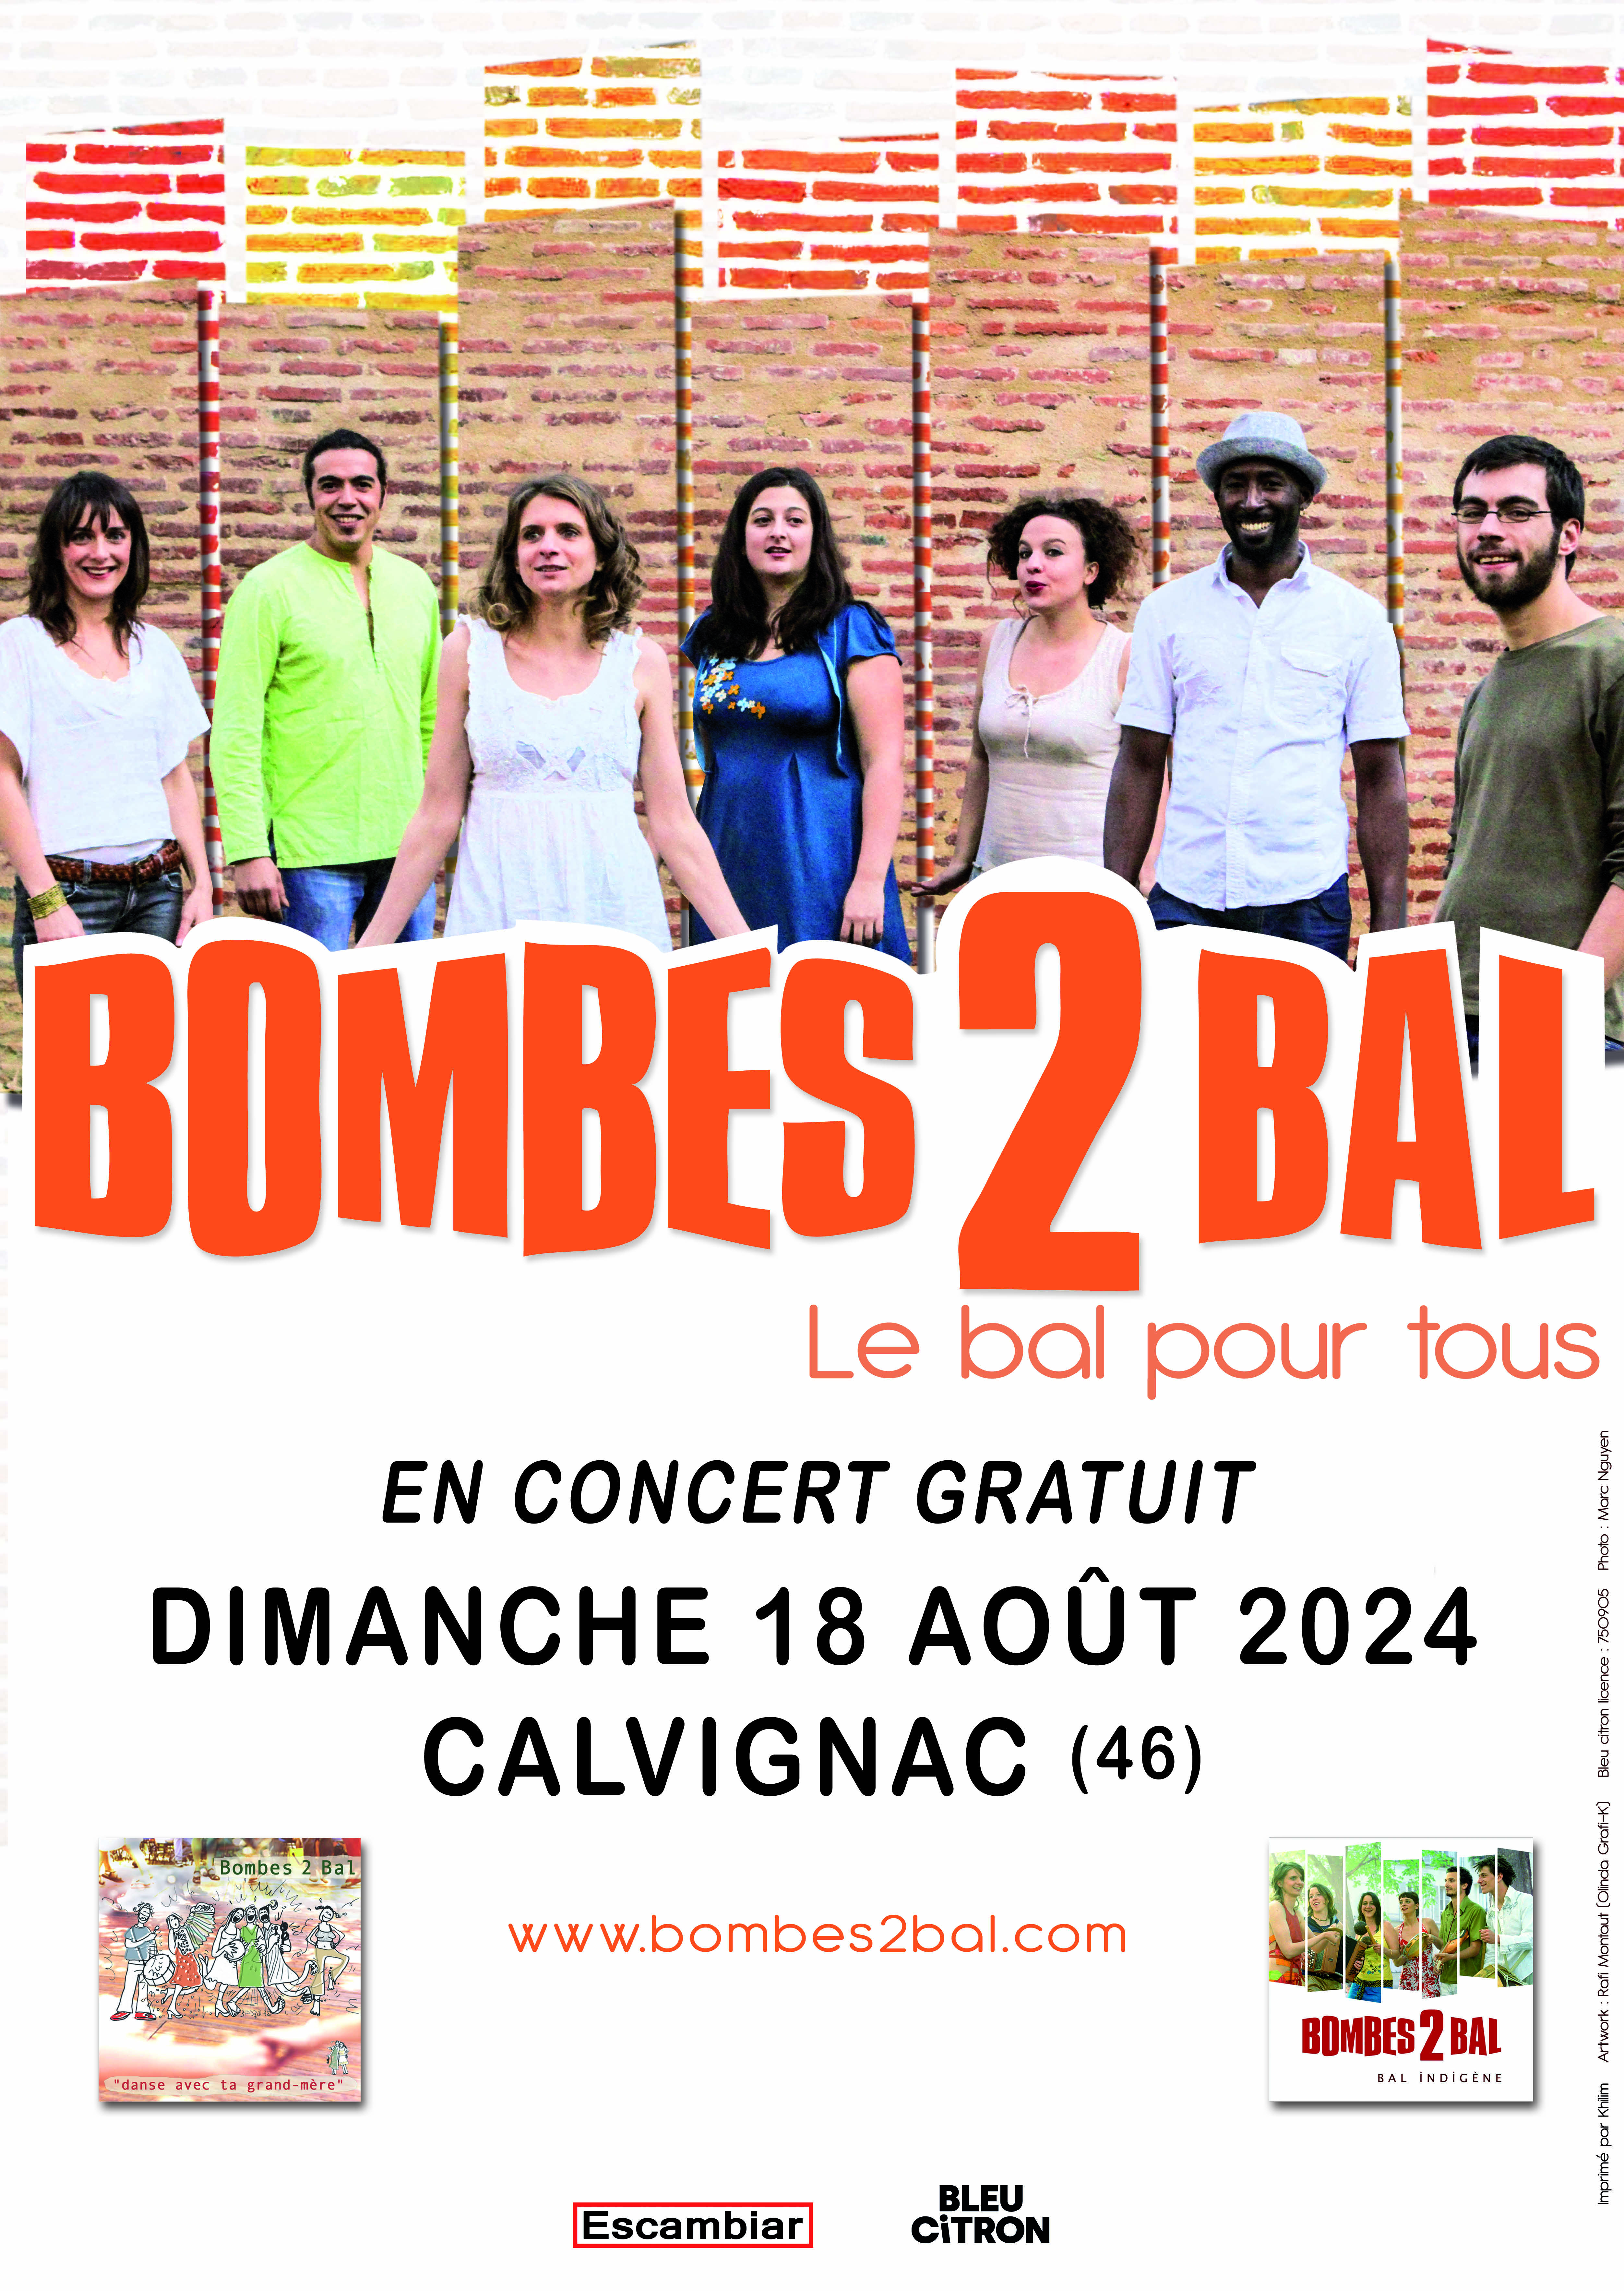 Figeac : Concert Bombes 2 bal à Calvignac